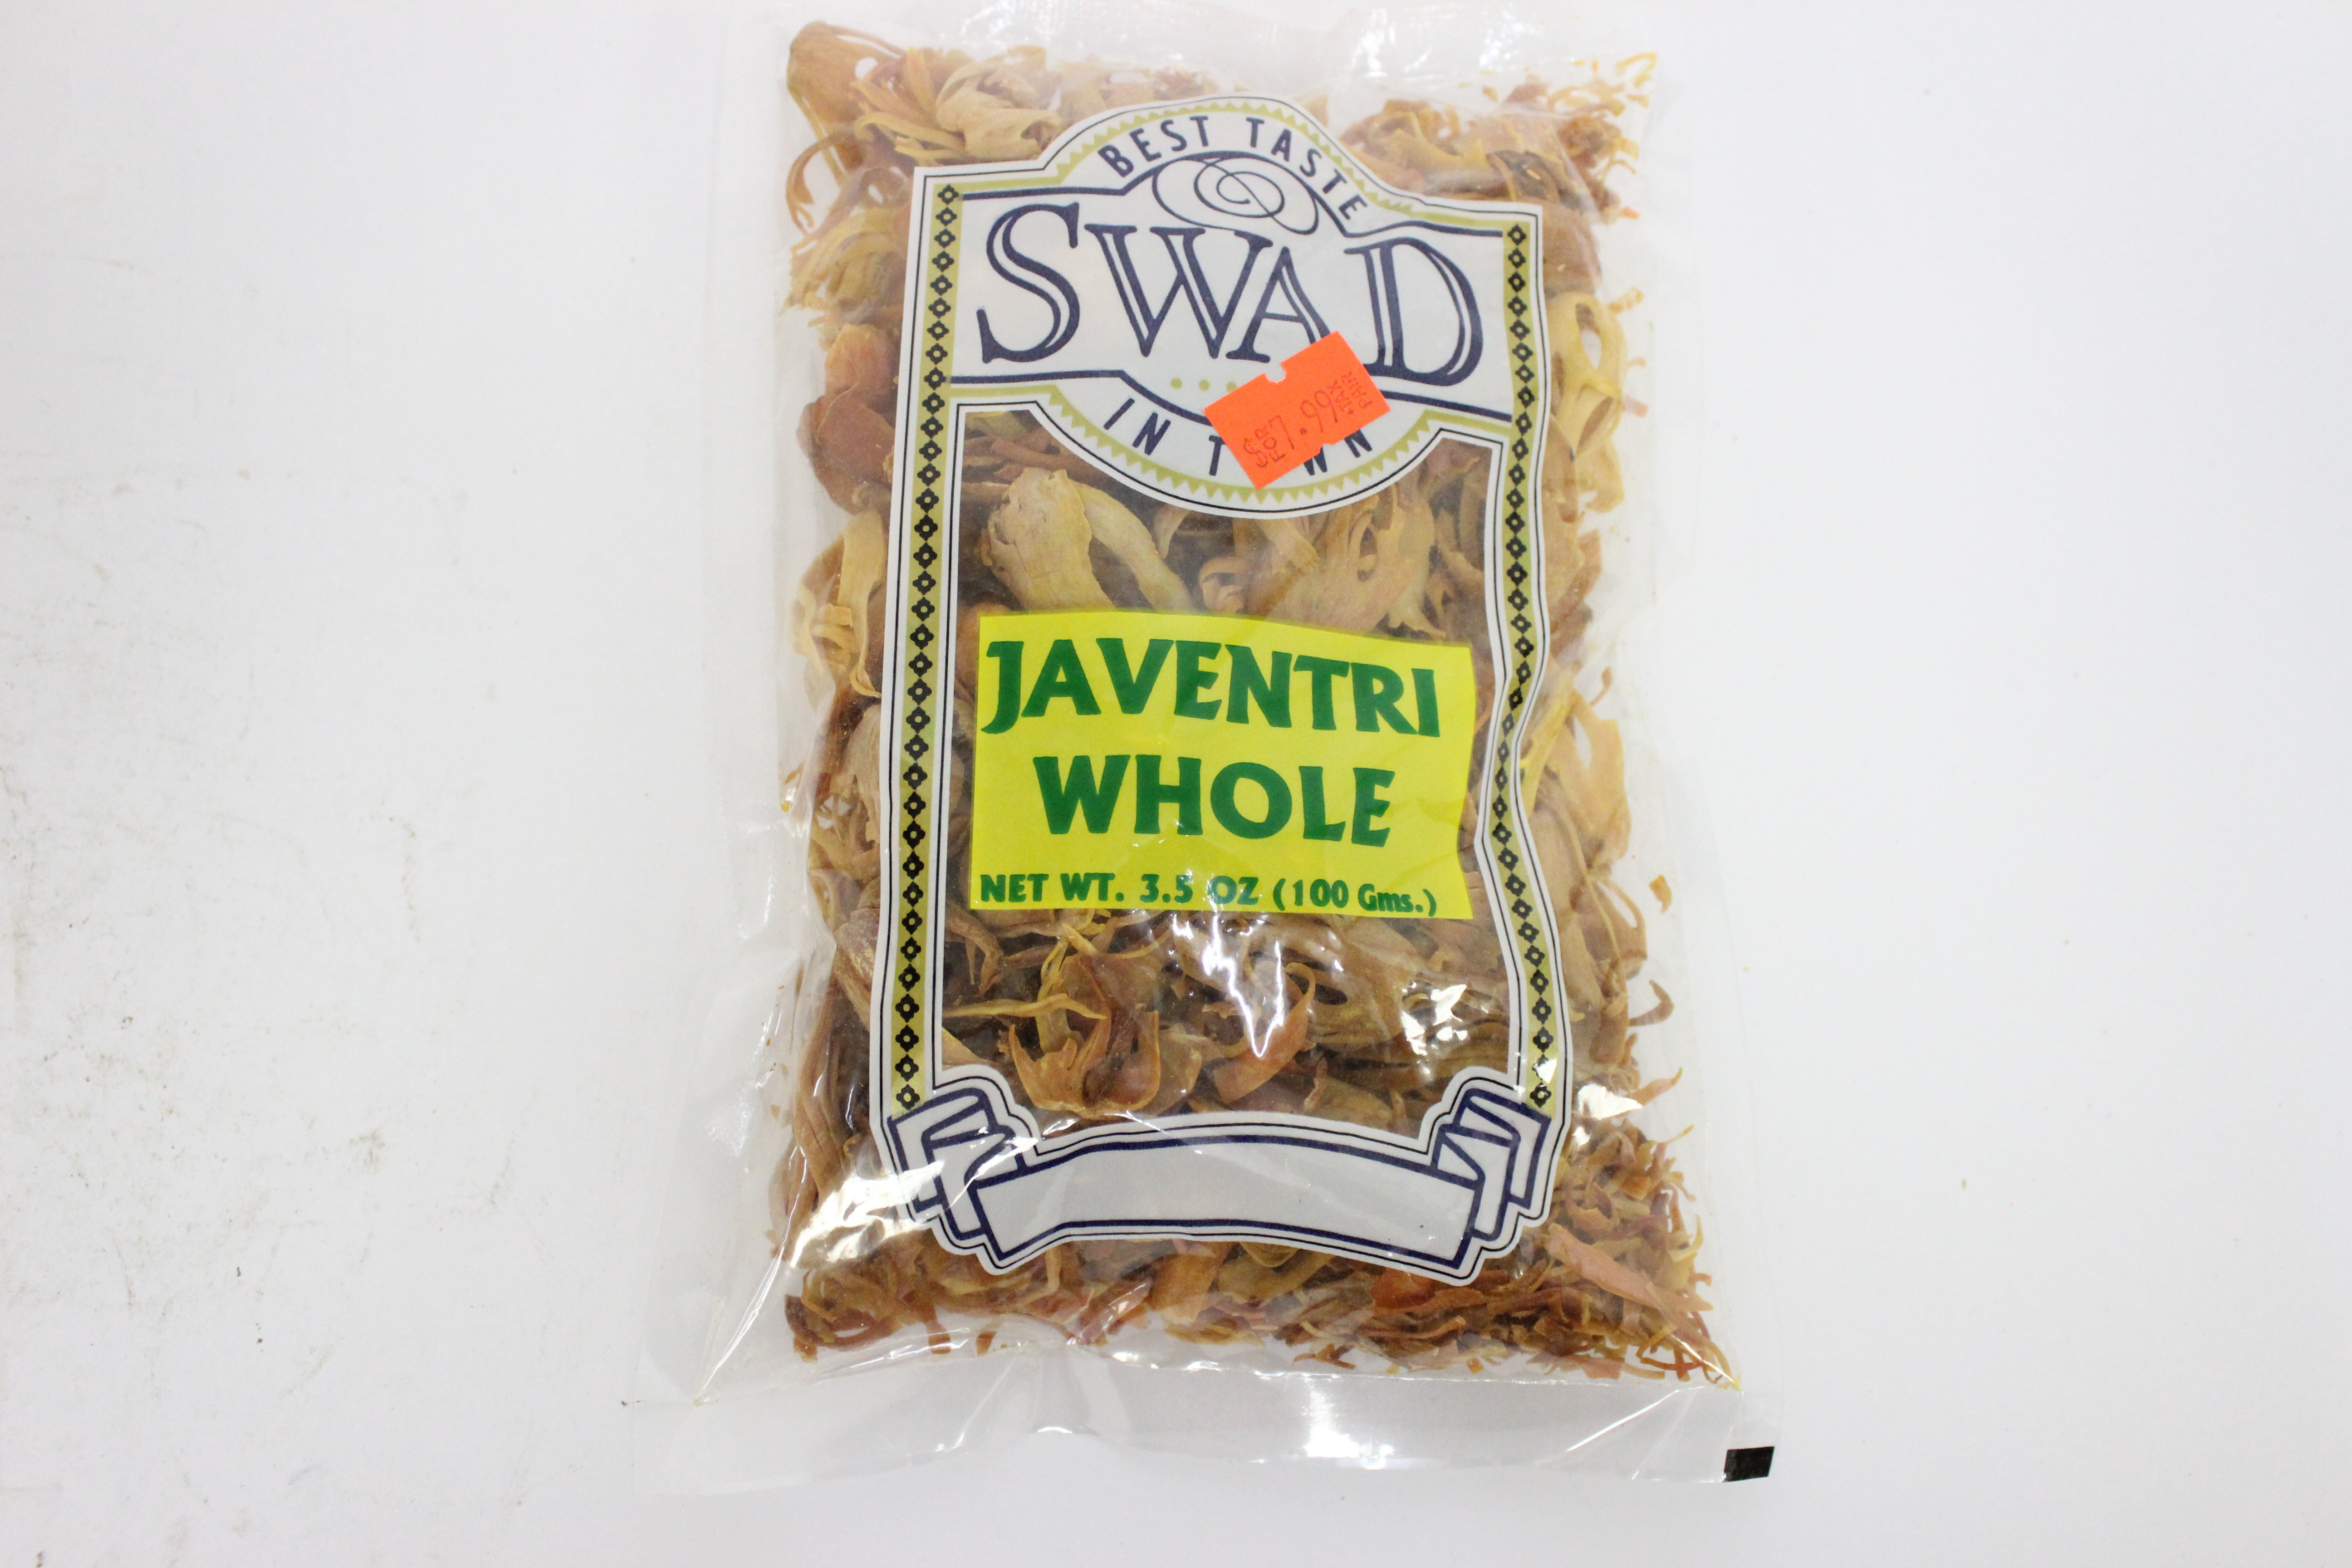 Javentri Whole 3.5 oz